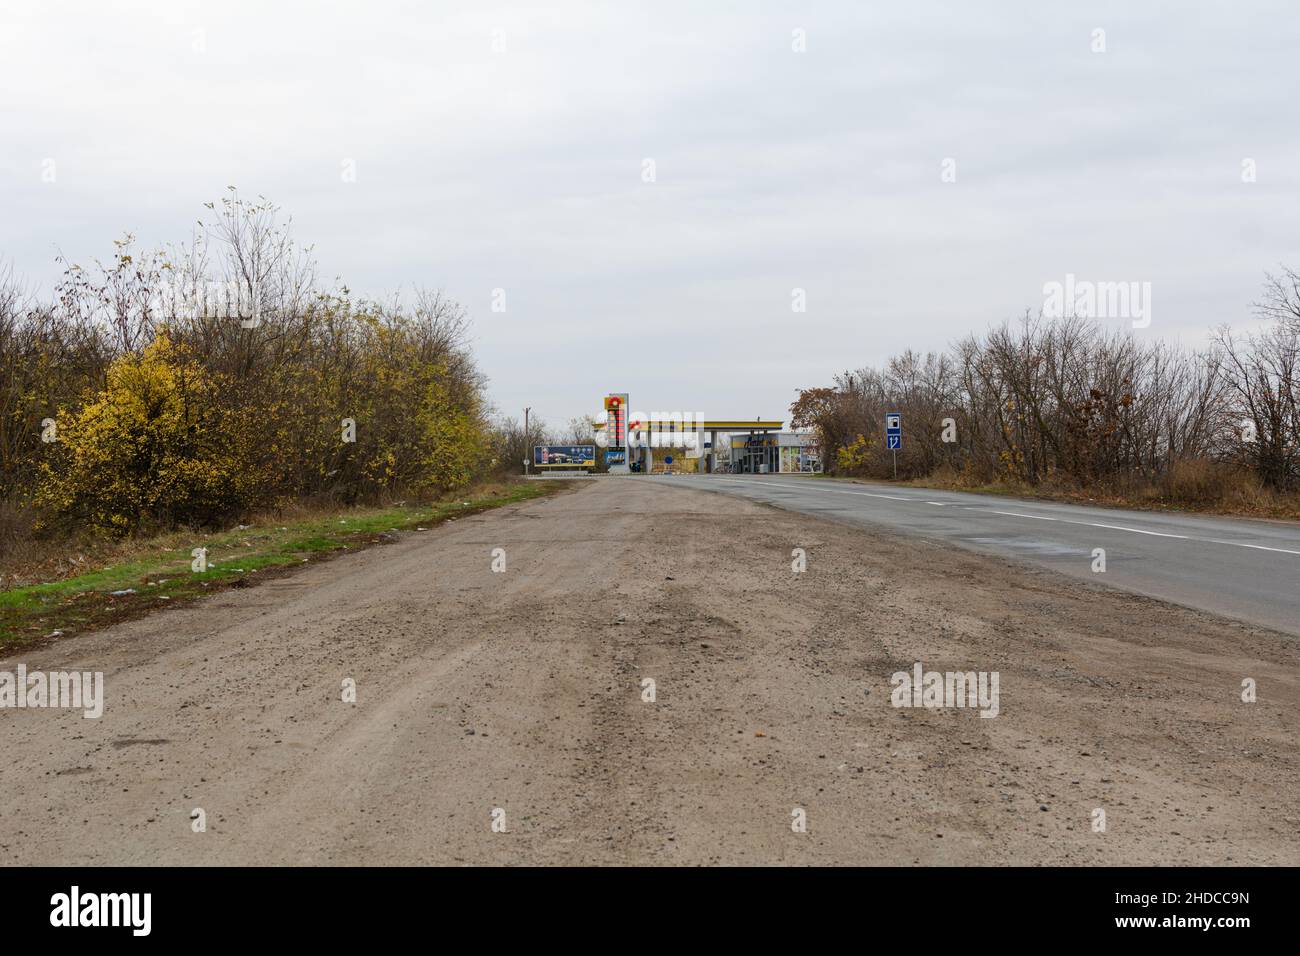 Regione di Odessa, Ucraina - 7 novembre 2021: Una vista da lontano in una stazione di benzina Foto Stock